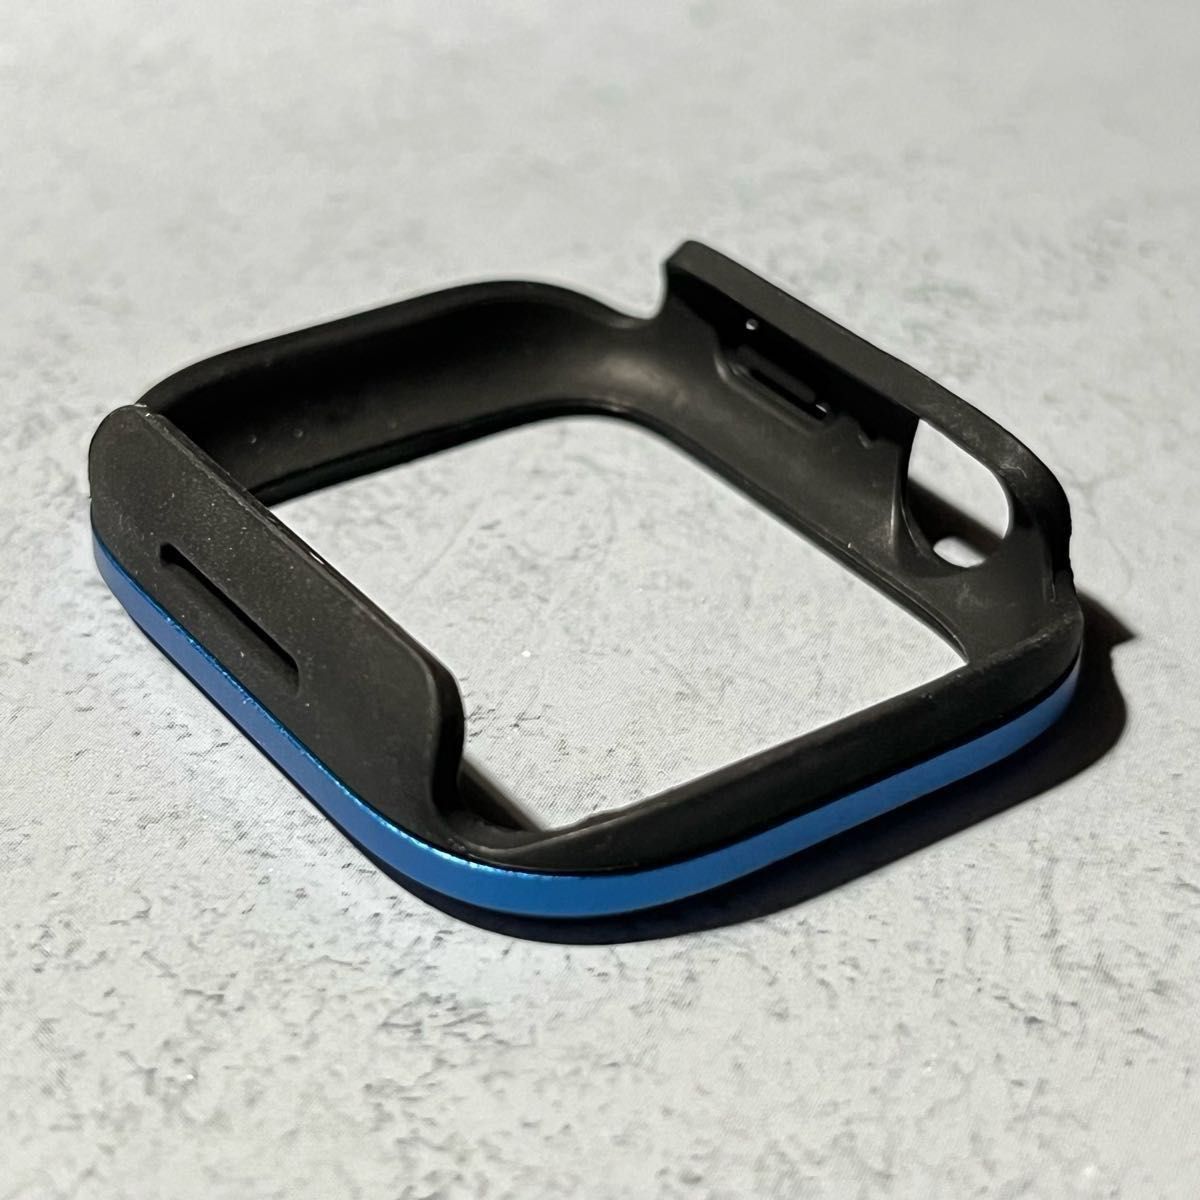 Apple watch 45mm 軽量 衝撃吸収 アルミ合金 TPU 二重構造 ケース 保護カバー バンパー ブルー 新品 未使用